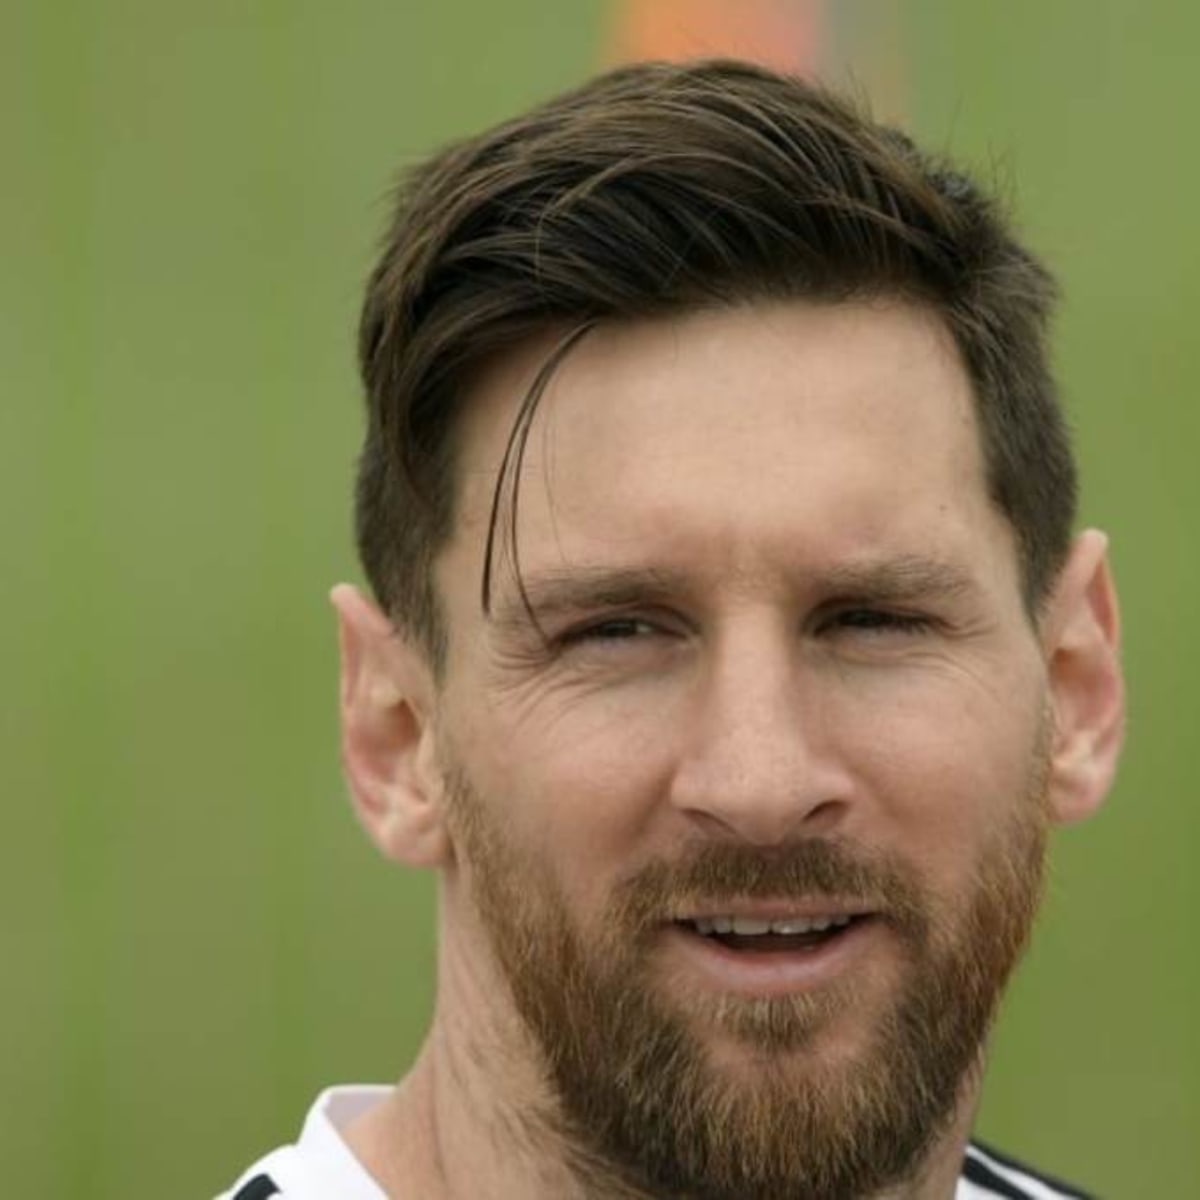 ESPECTACULARES | Los mejores tatuajes de los argentinos sobre Lionel Messi  - Sports Illustrated